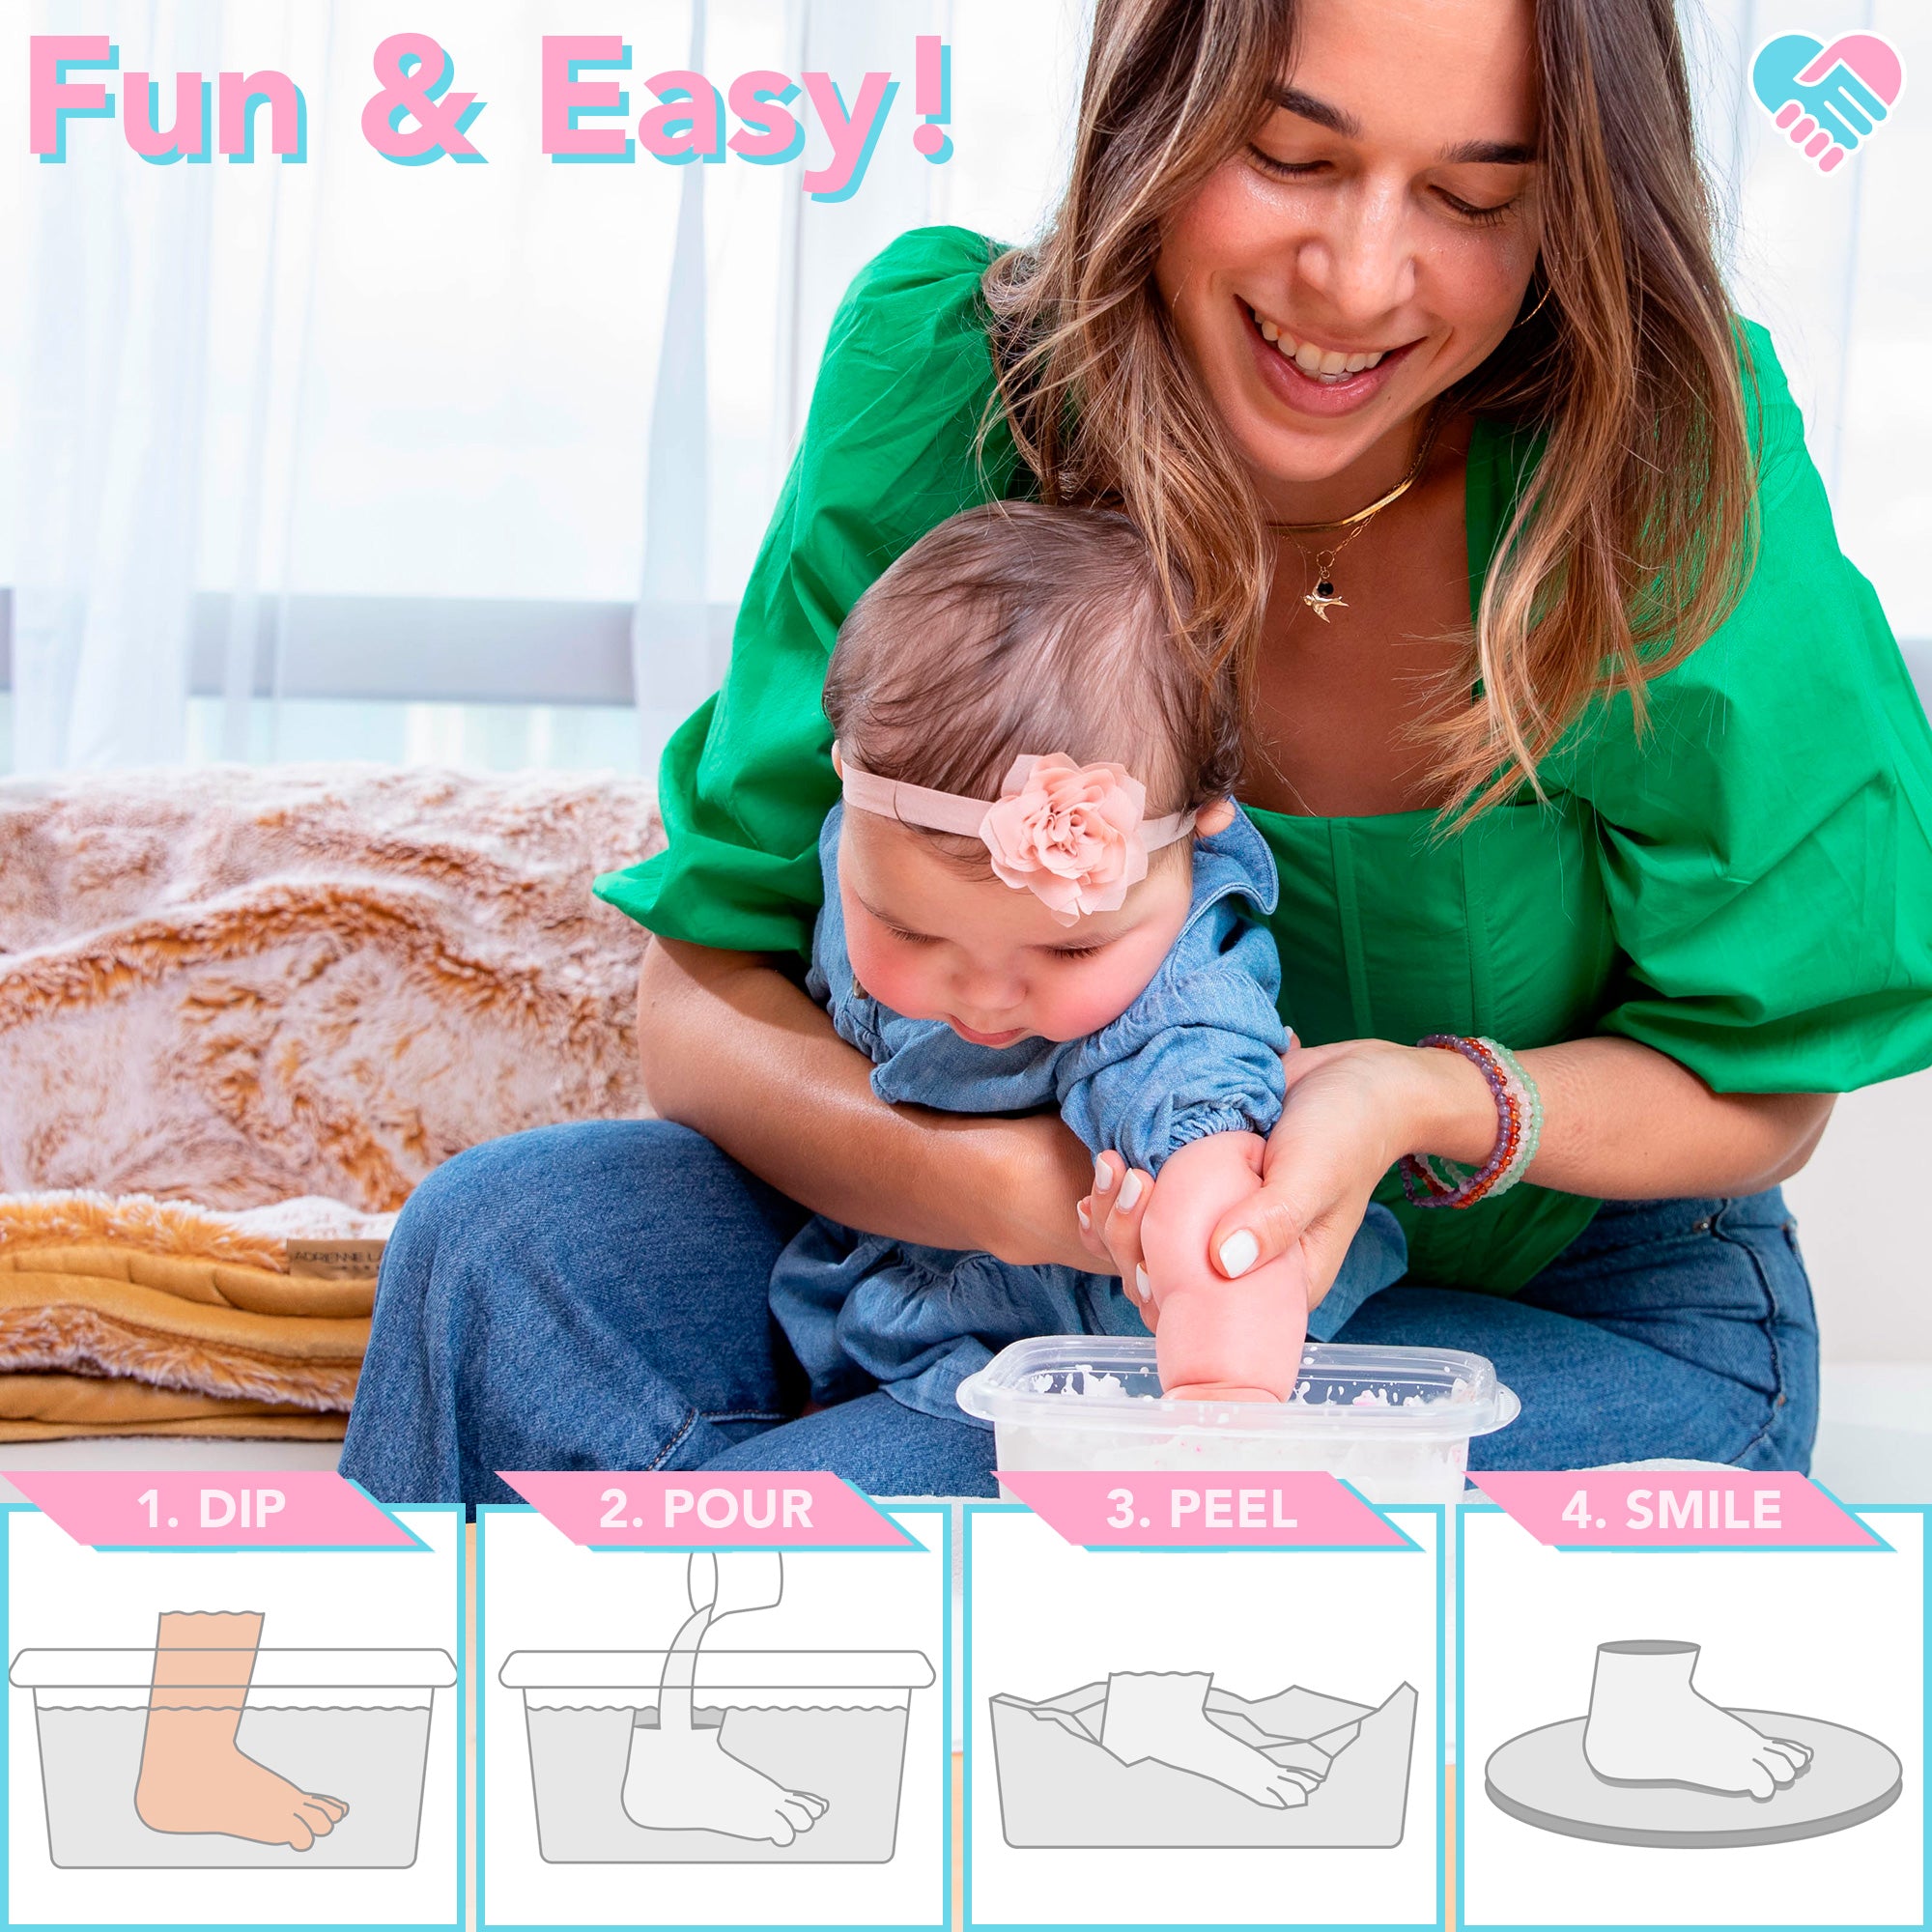 Luna Bean Baby Hand and Footprint Kit - Perfect Baby Keepsake